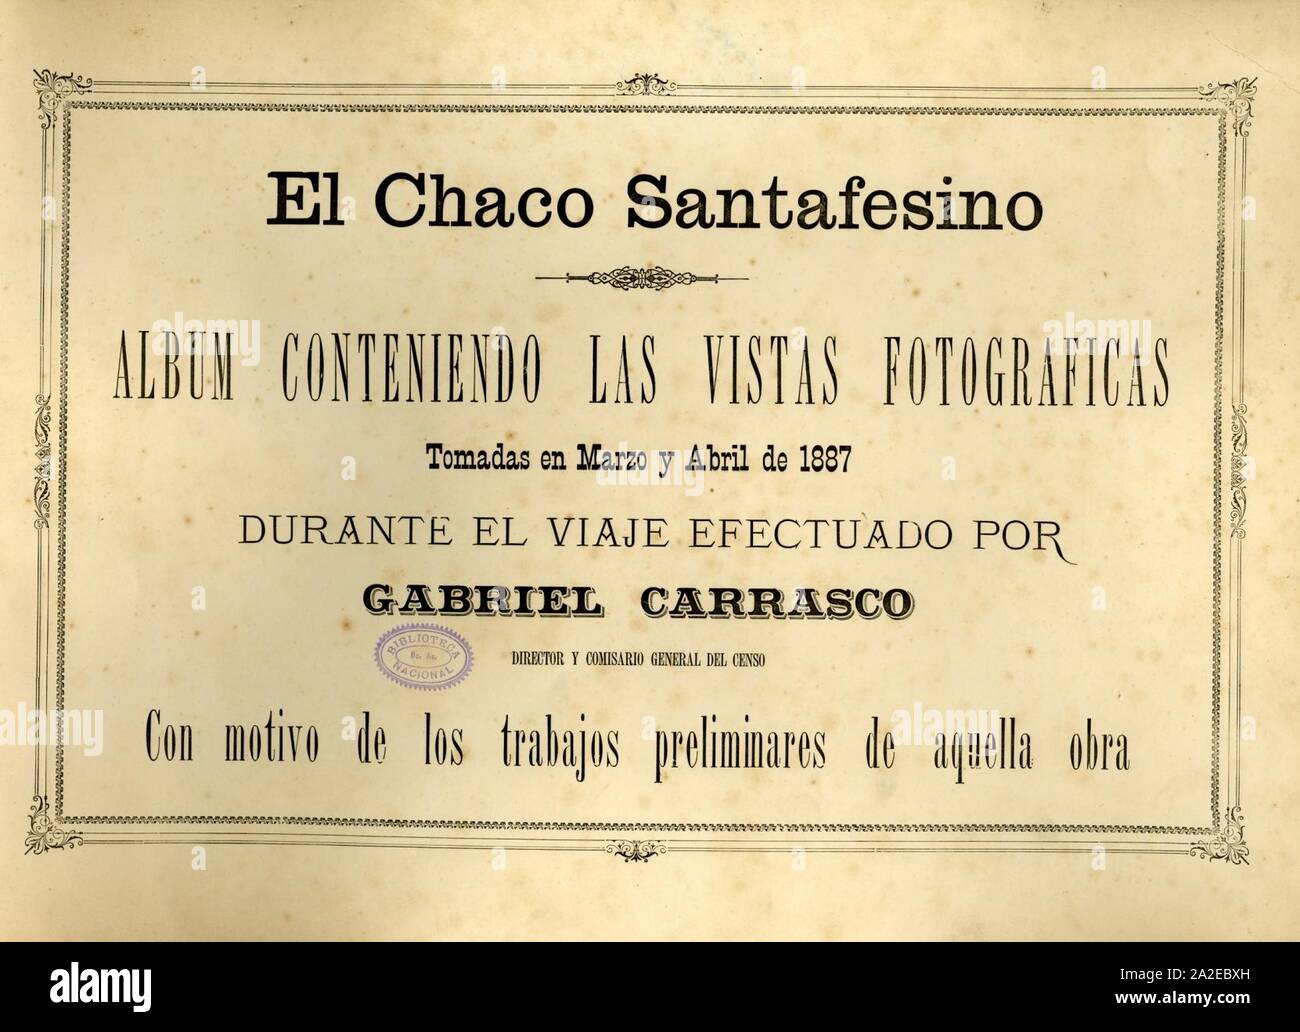 El Chaco Santafesino - Caratula. Foto Stock